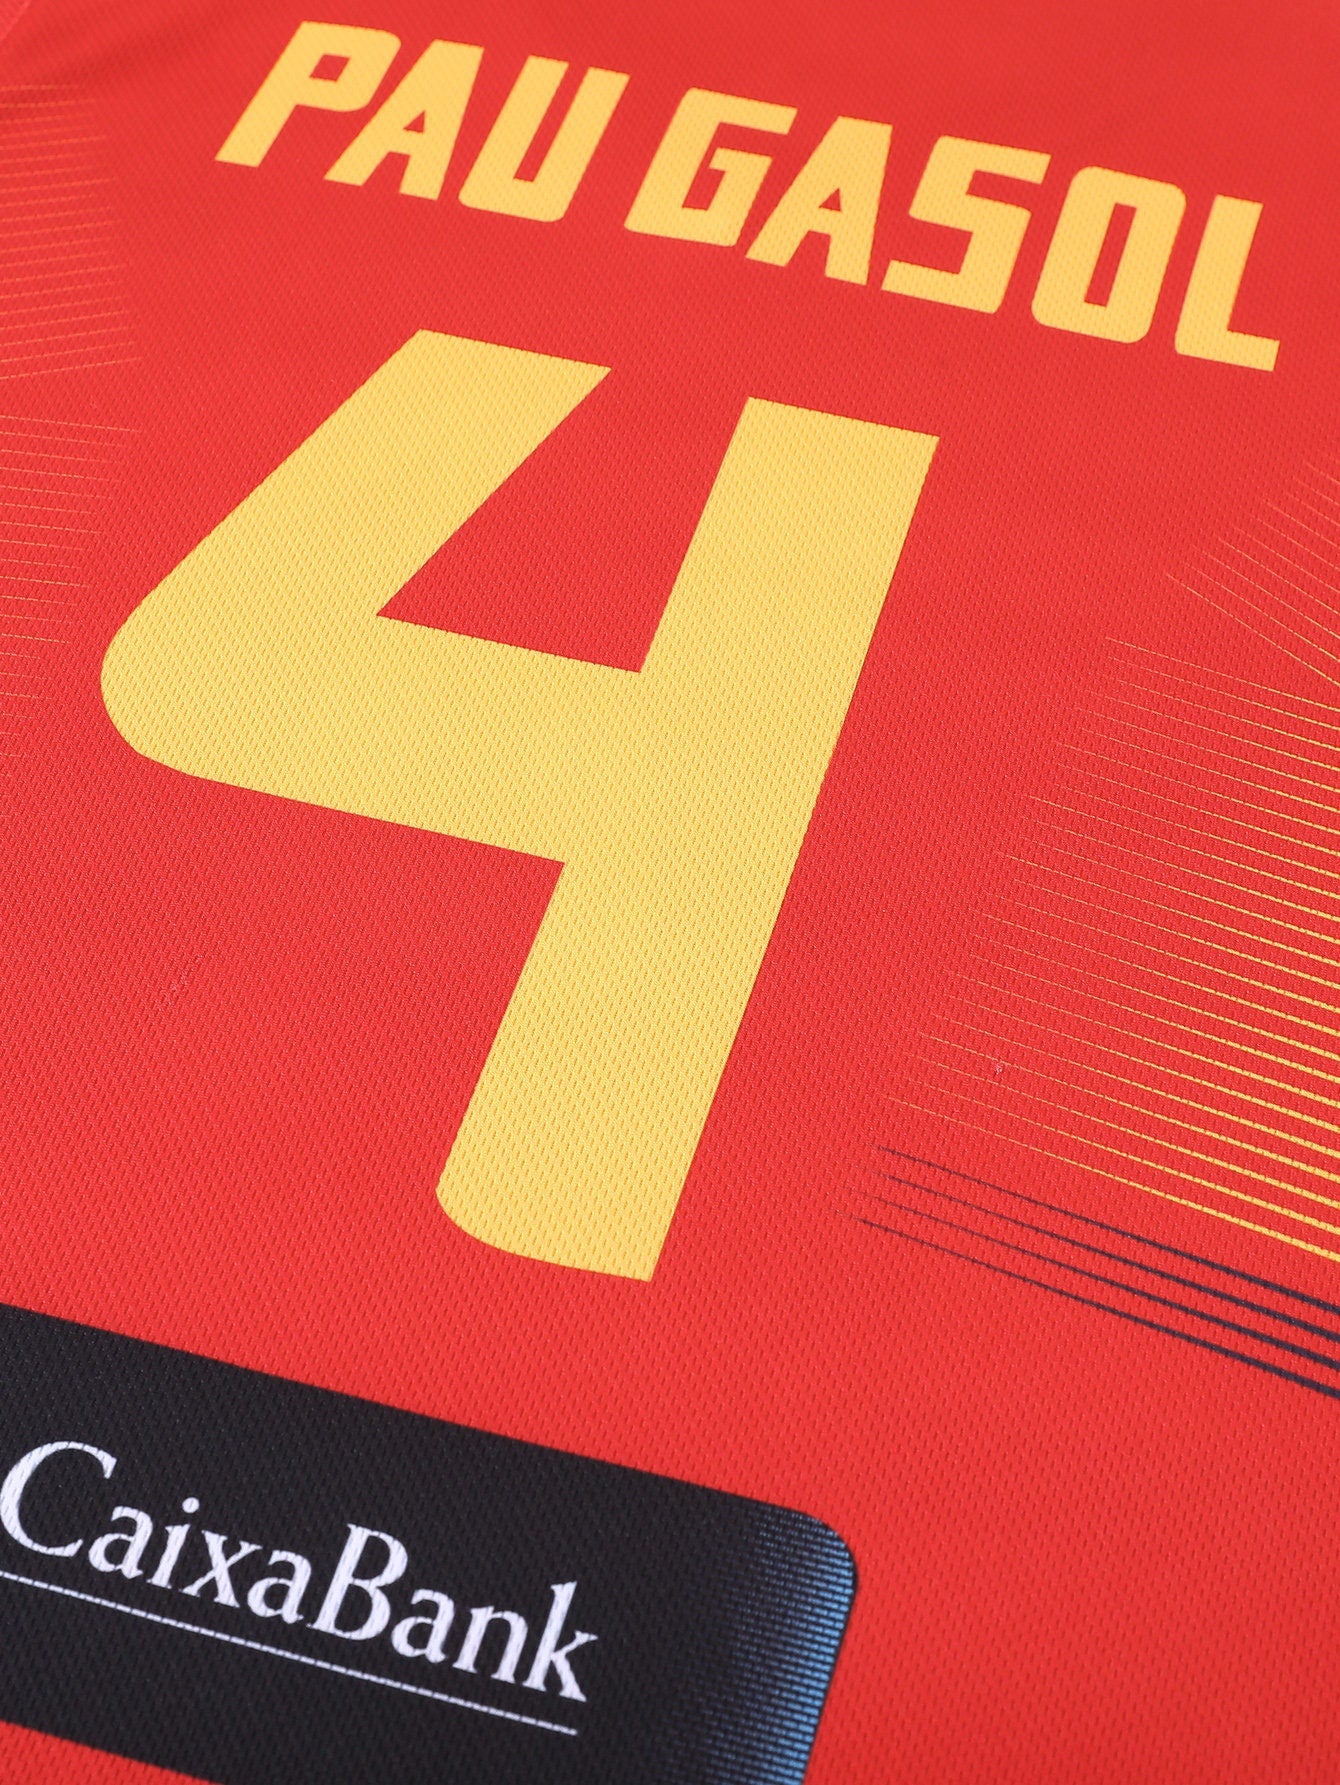 Pau Gasol Spain National Team World Cup 2014 Basketball Jersey